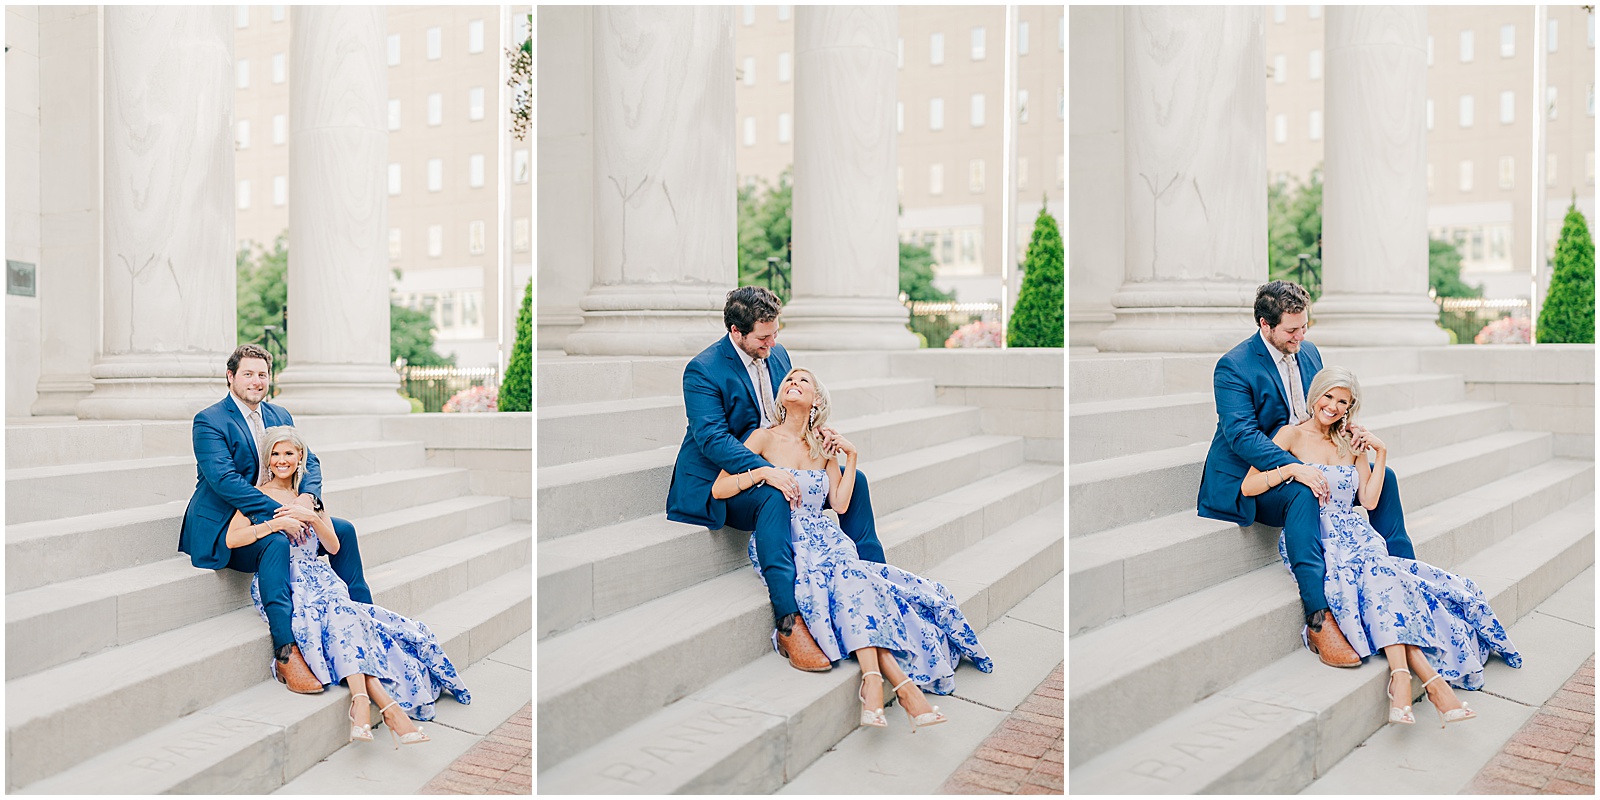 Engagement photos in Historic downtown Huntsville, Alabama